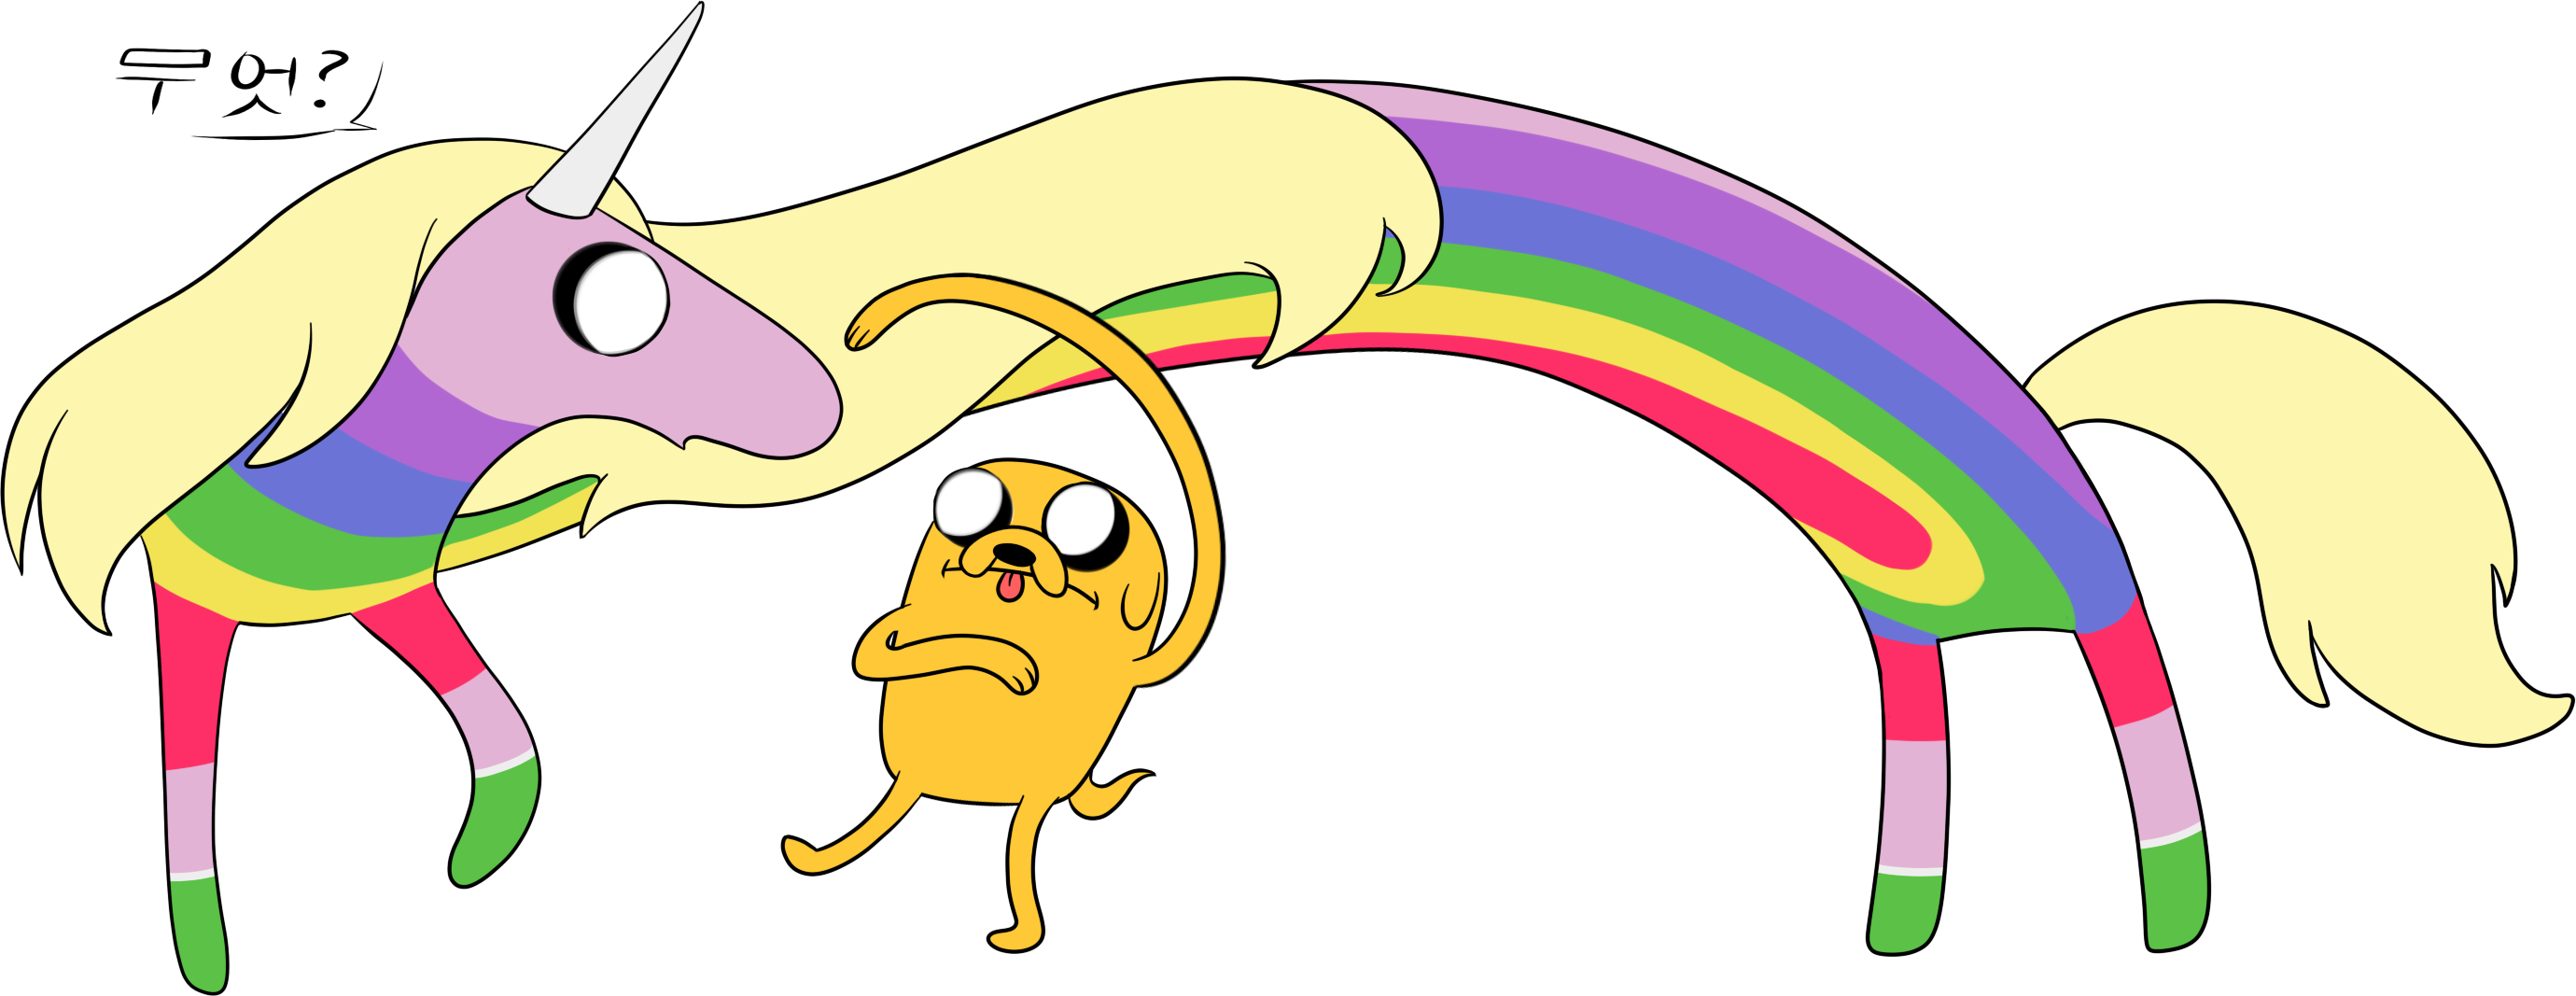 Adventure Time - BOOP!